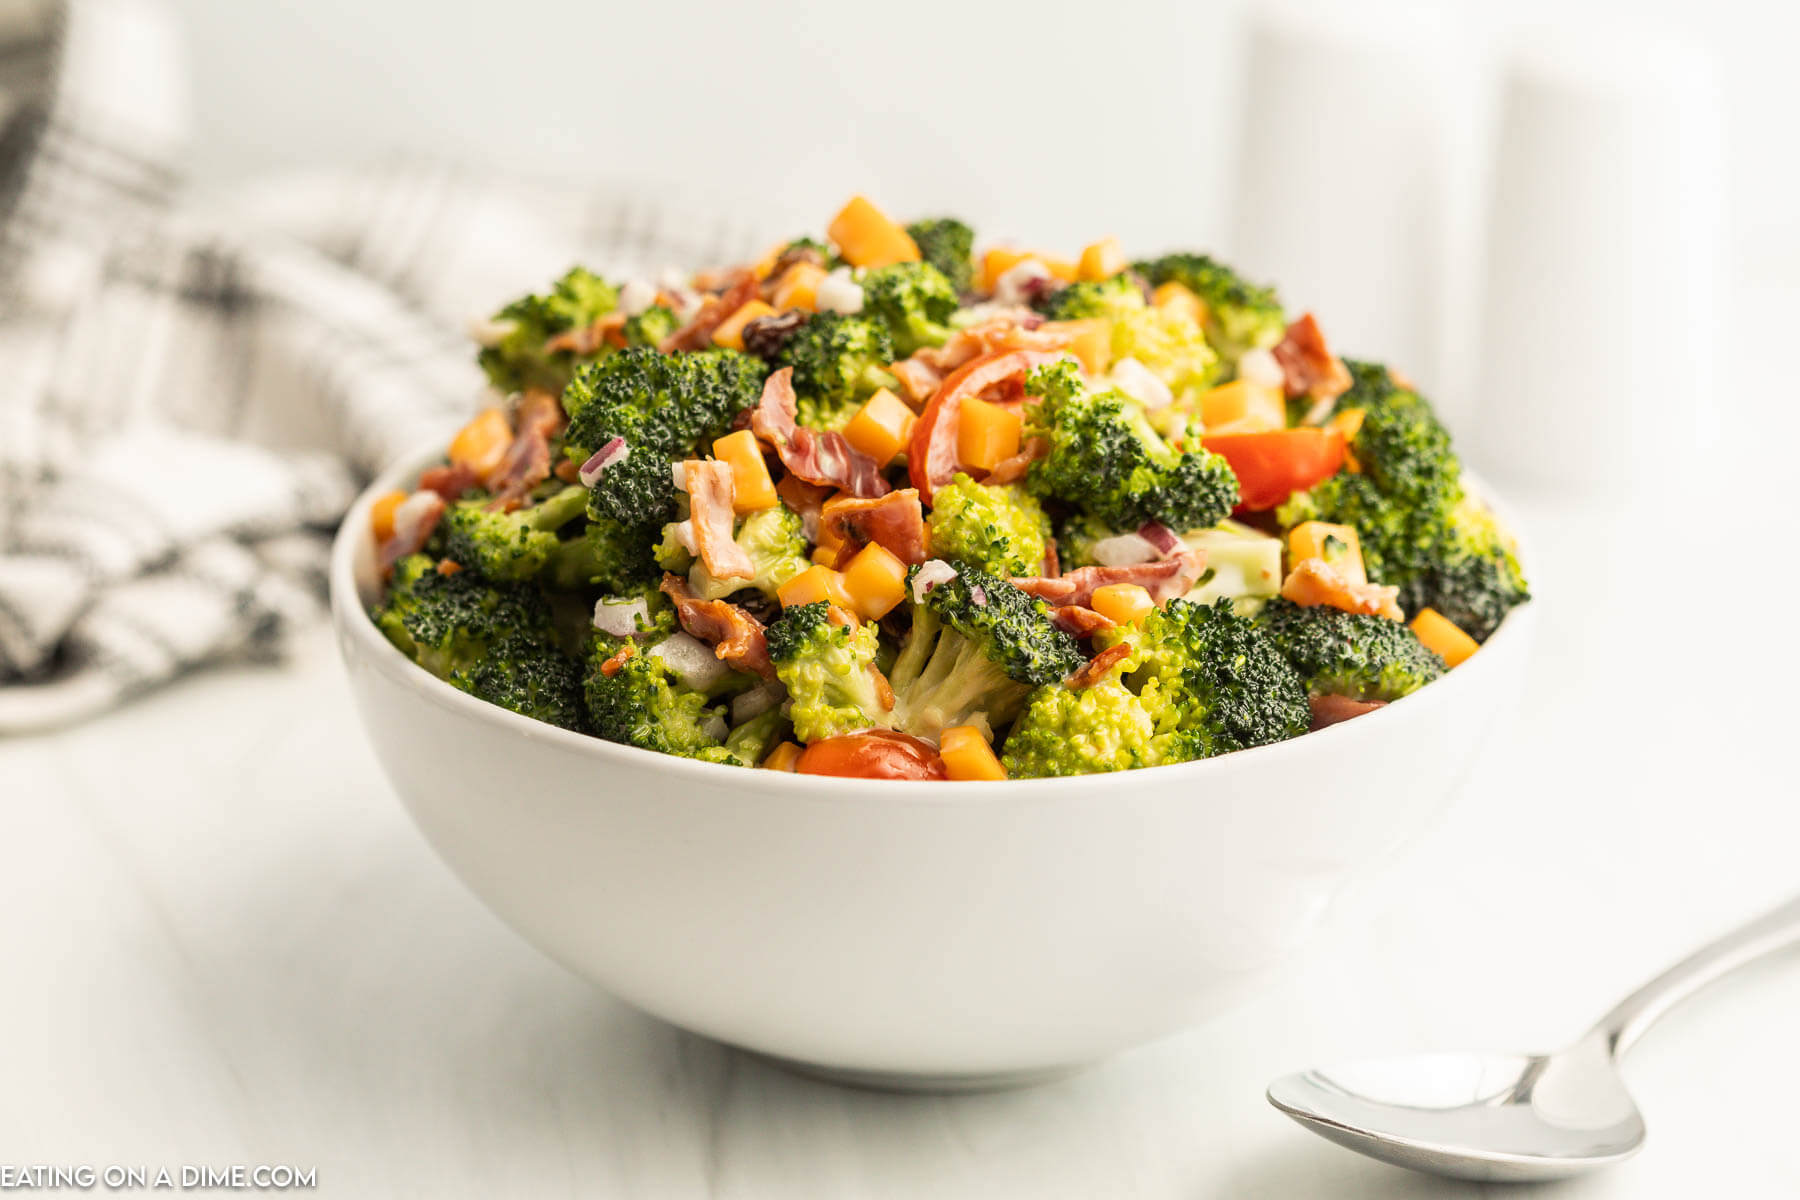 A bowl of broccoli salad